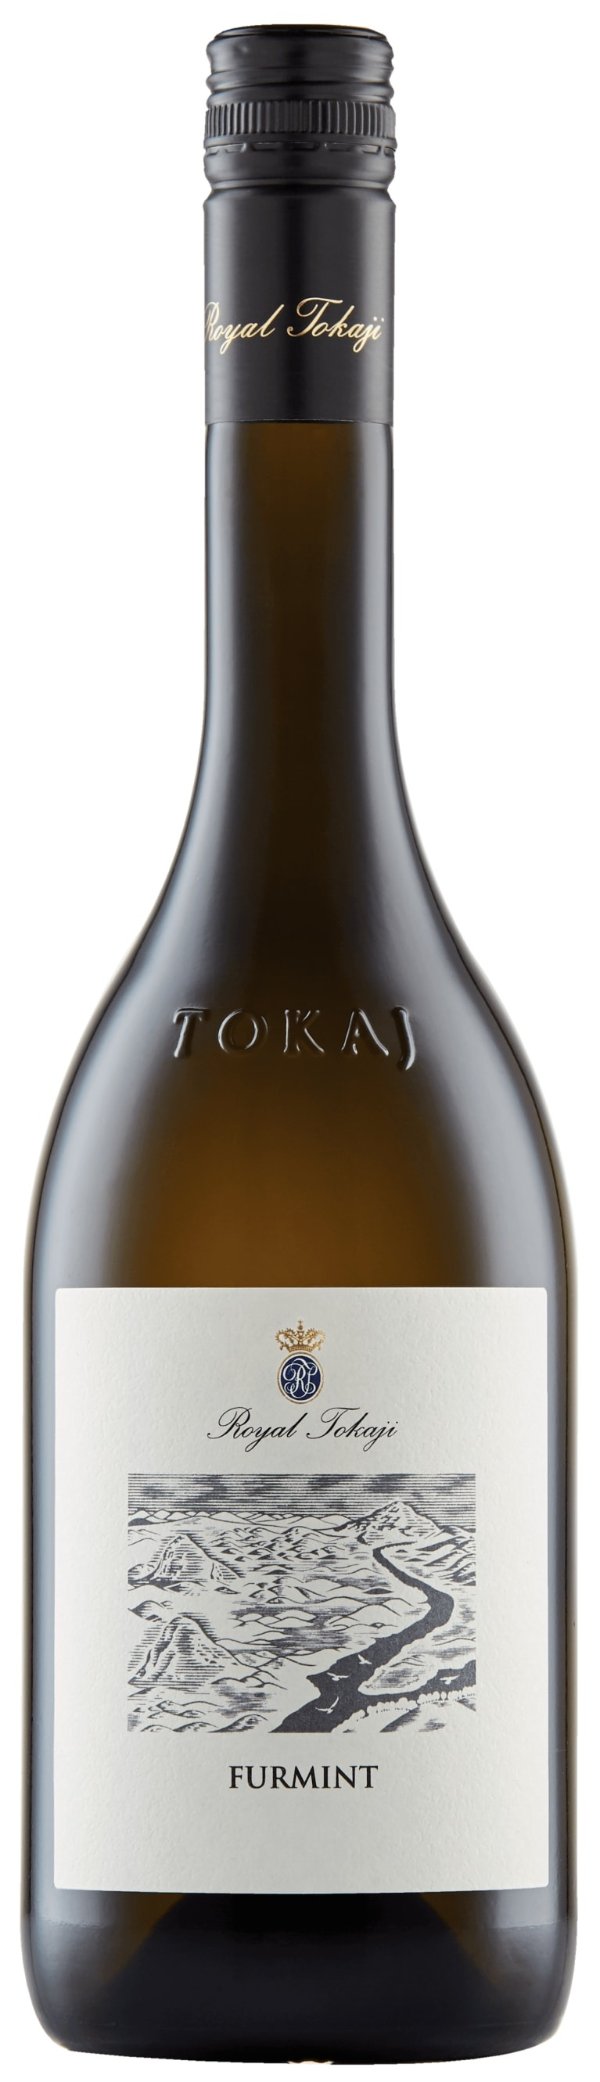 Royal Tokaji The Oddity Furmint 2019 白葡萄酒